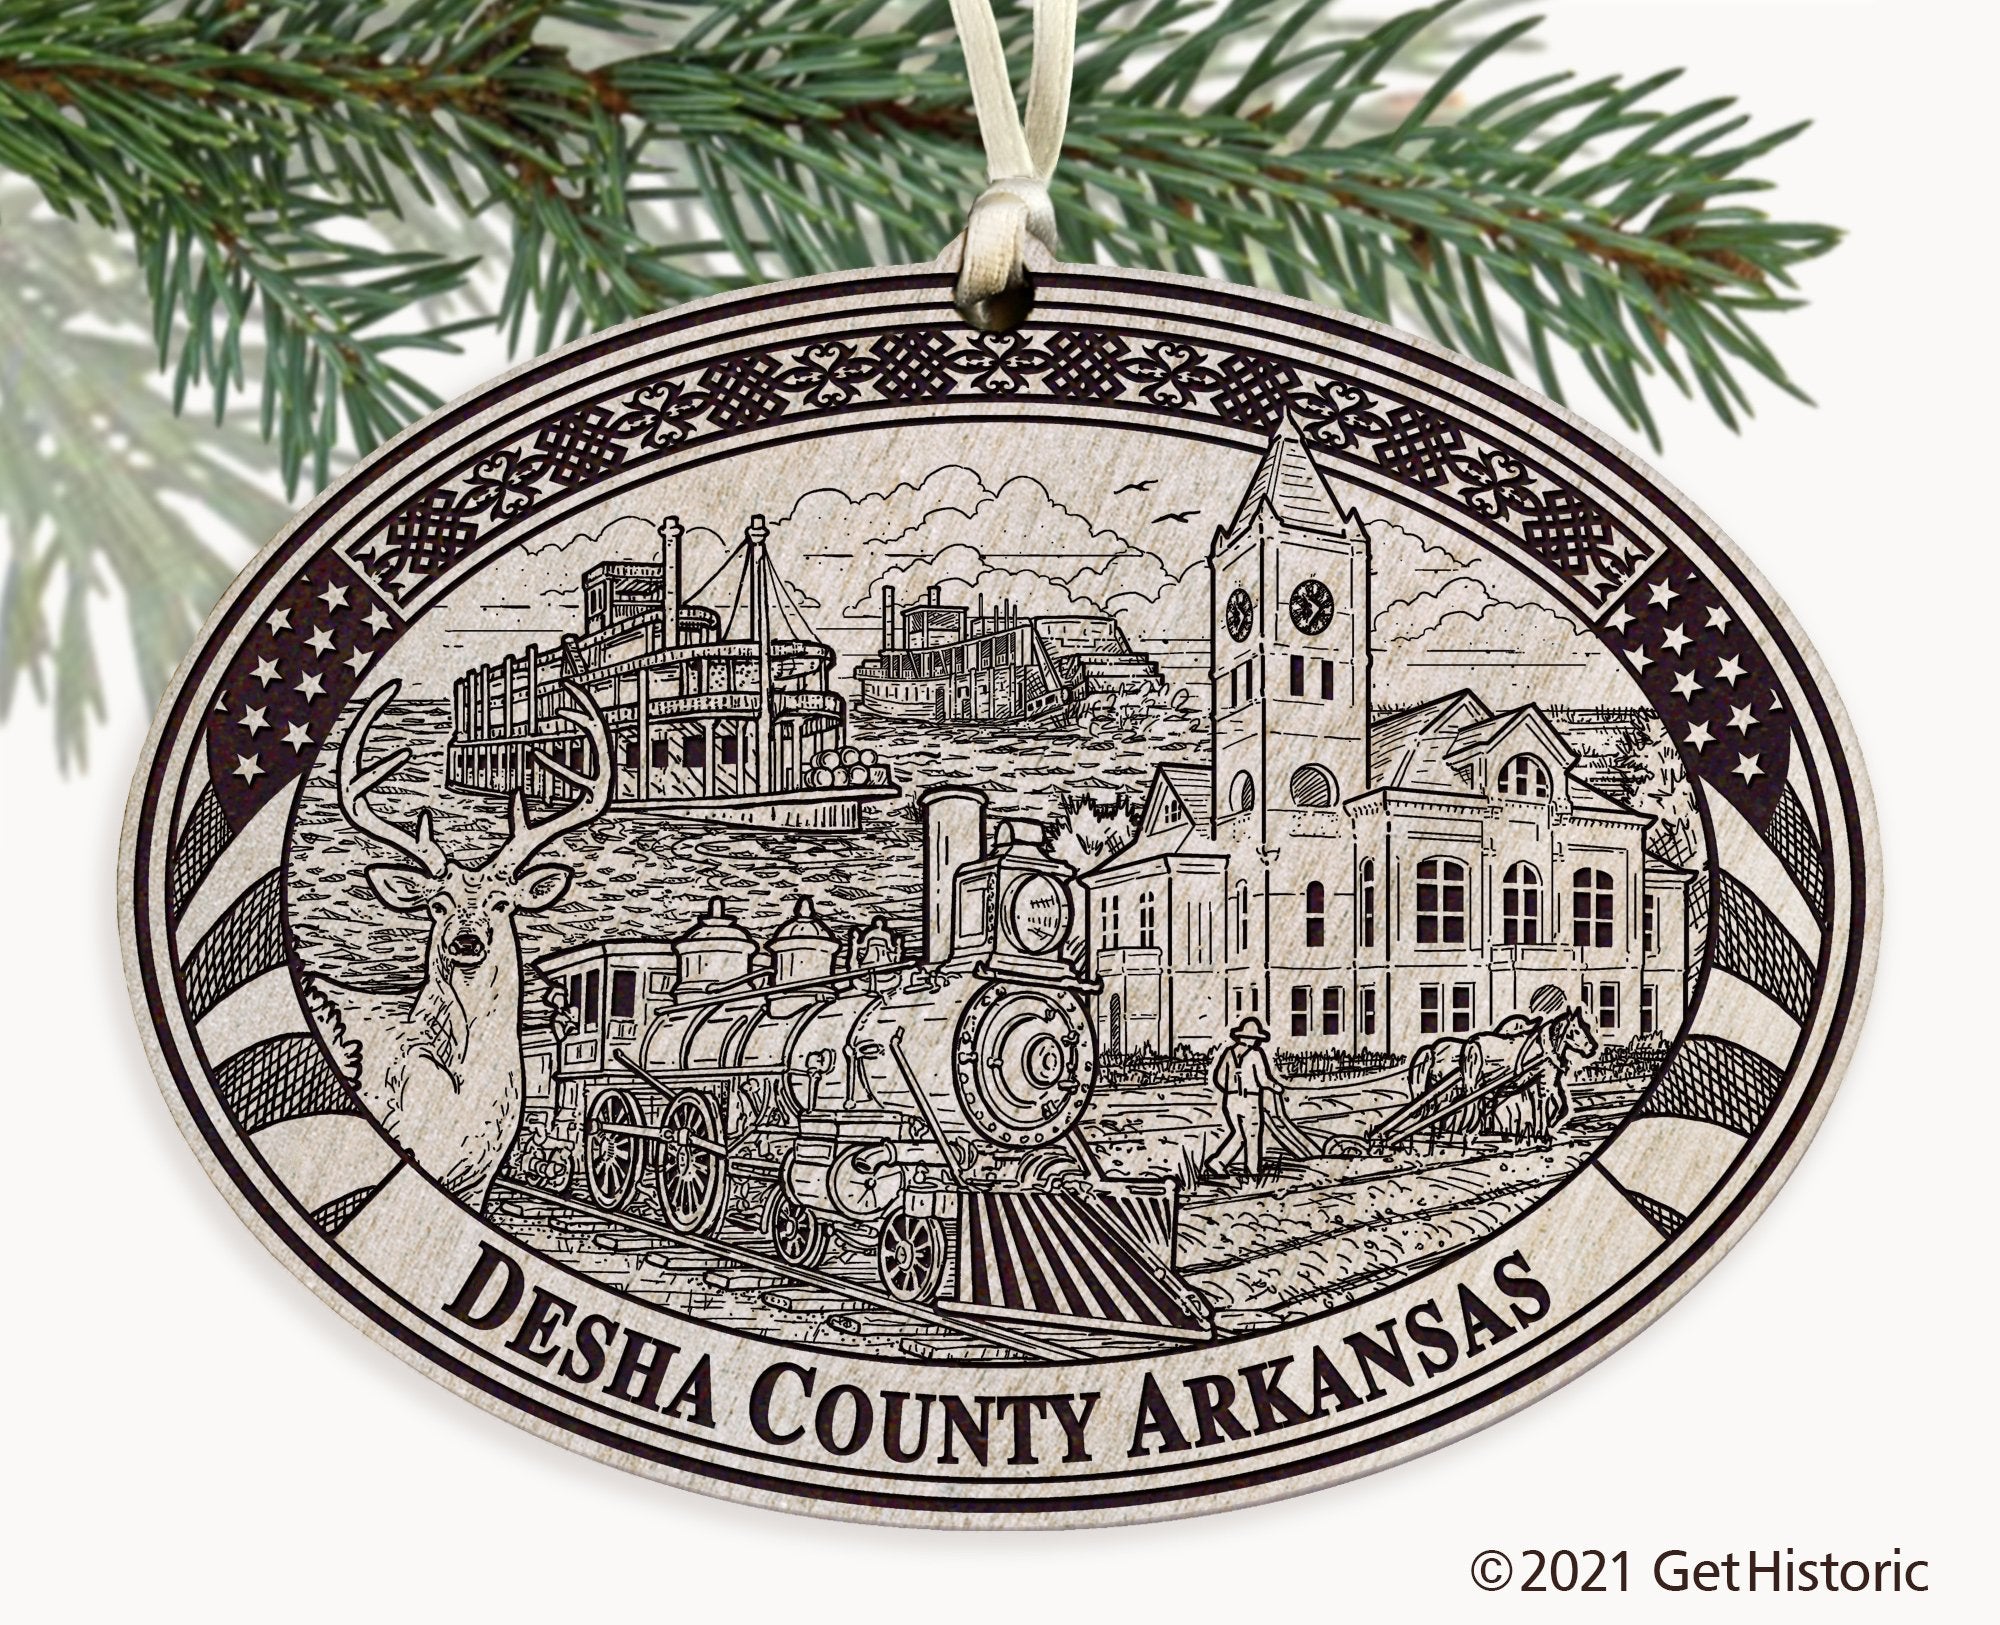 Desha County Arkansas Engraved Ornament